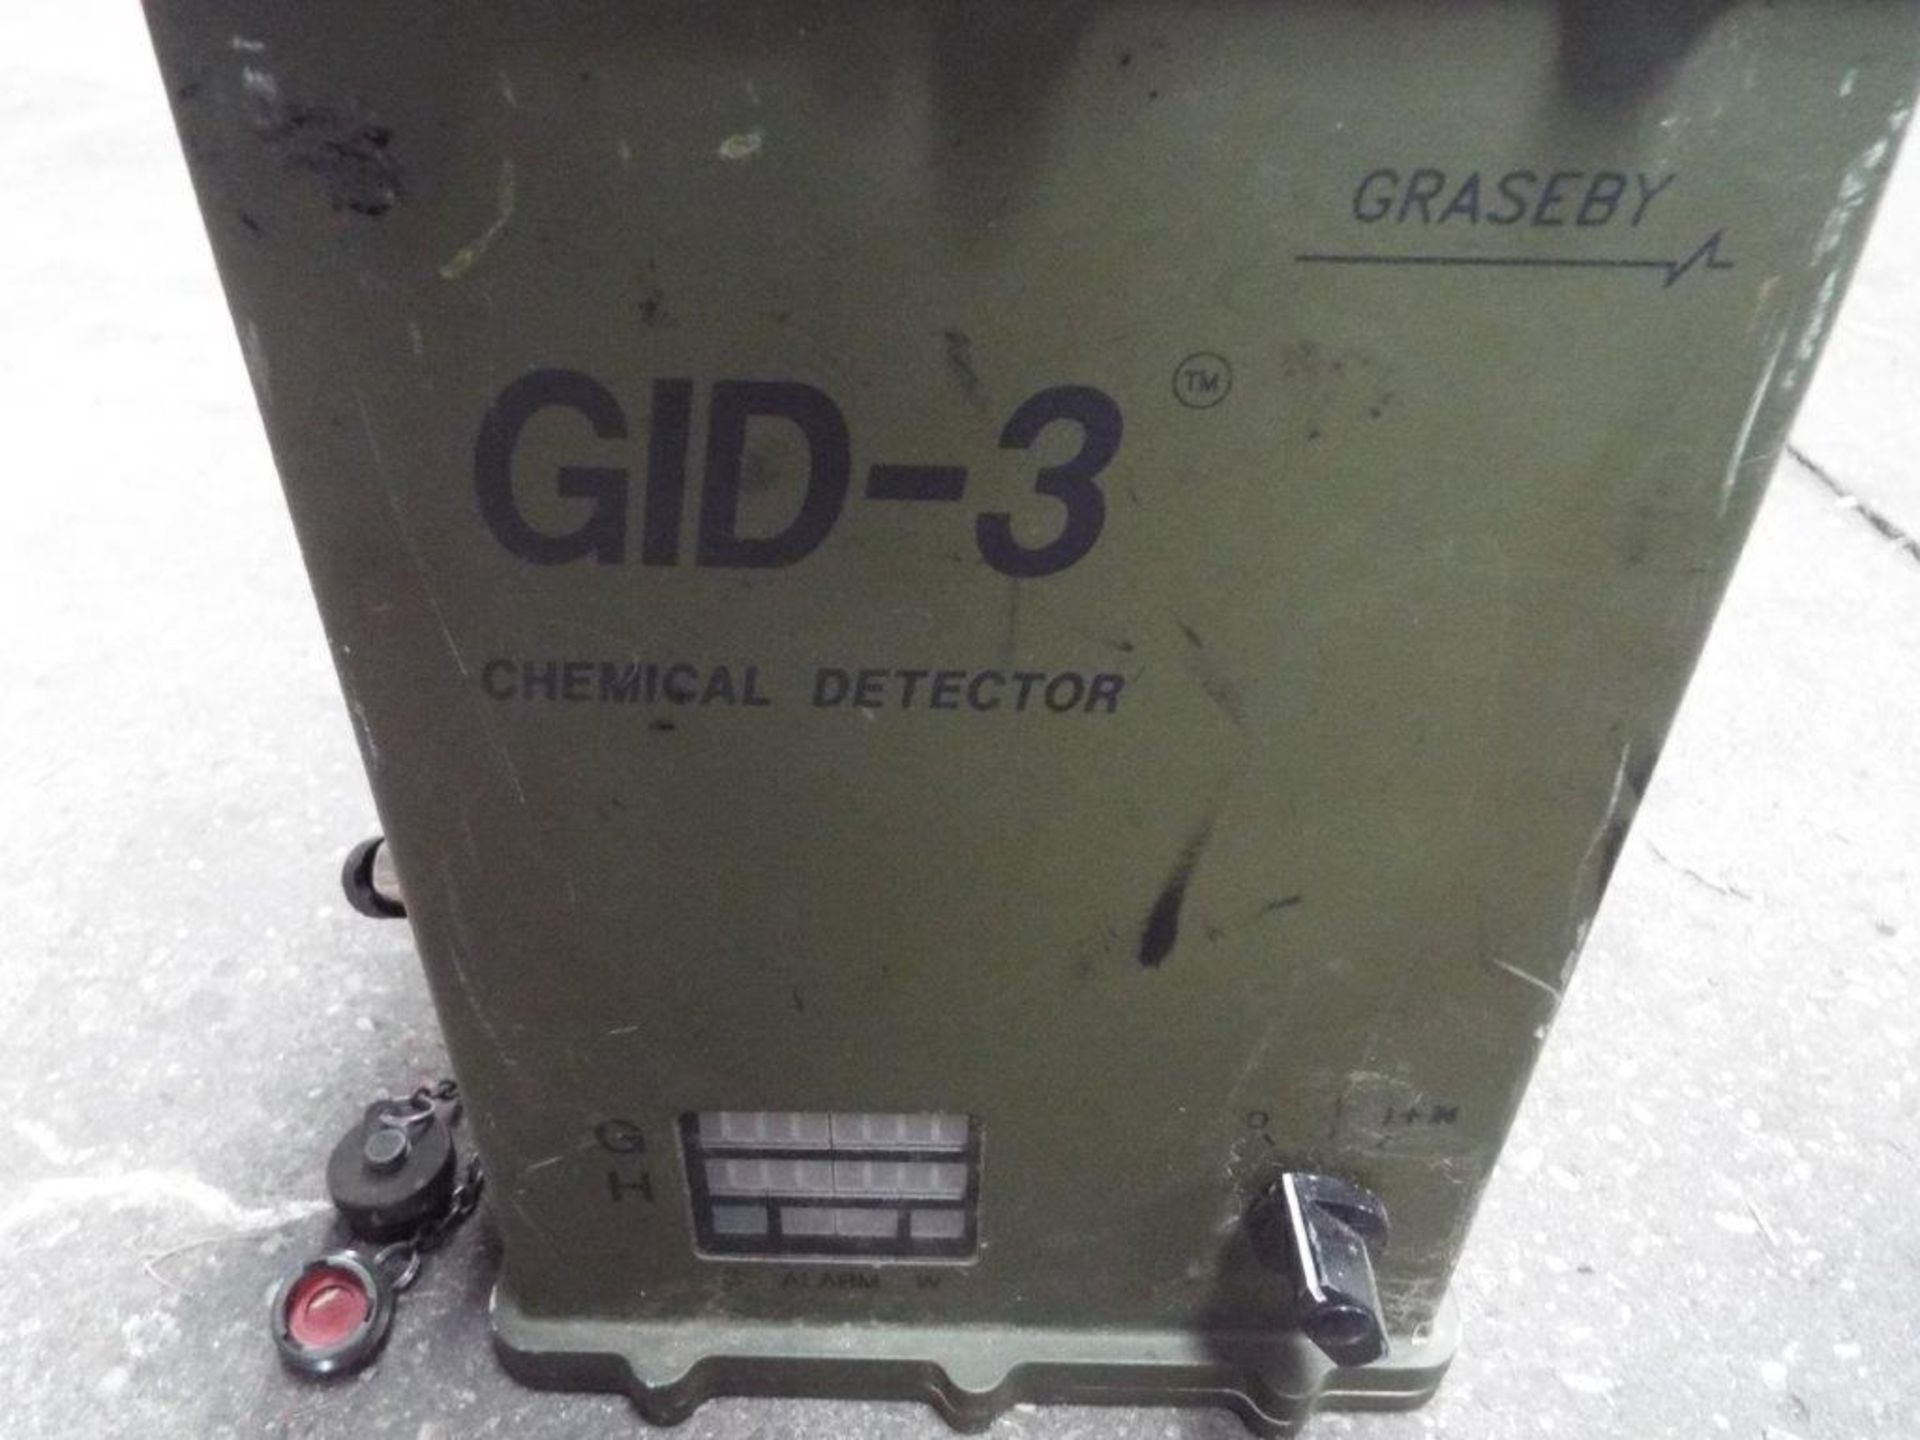 Graseby GID-3 Chemical Detector - Image 2 of 6